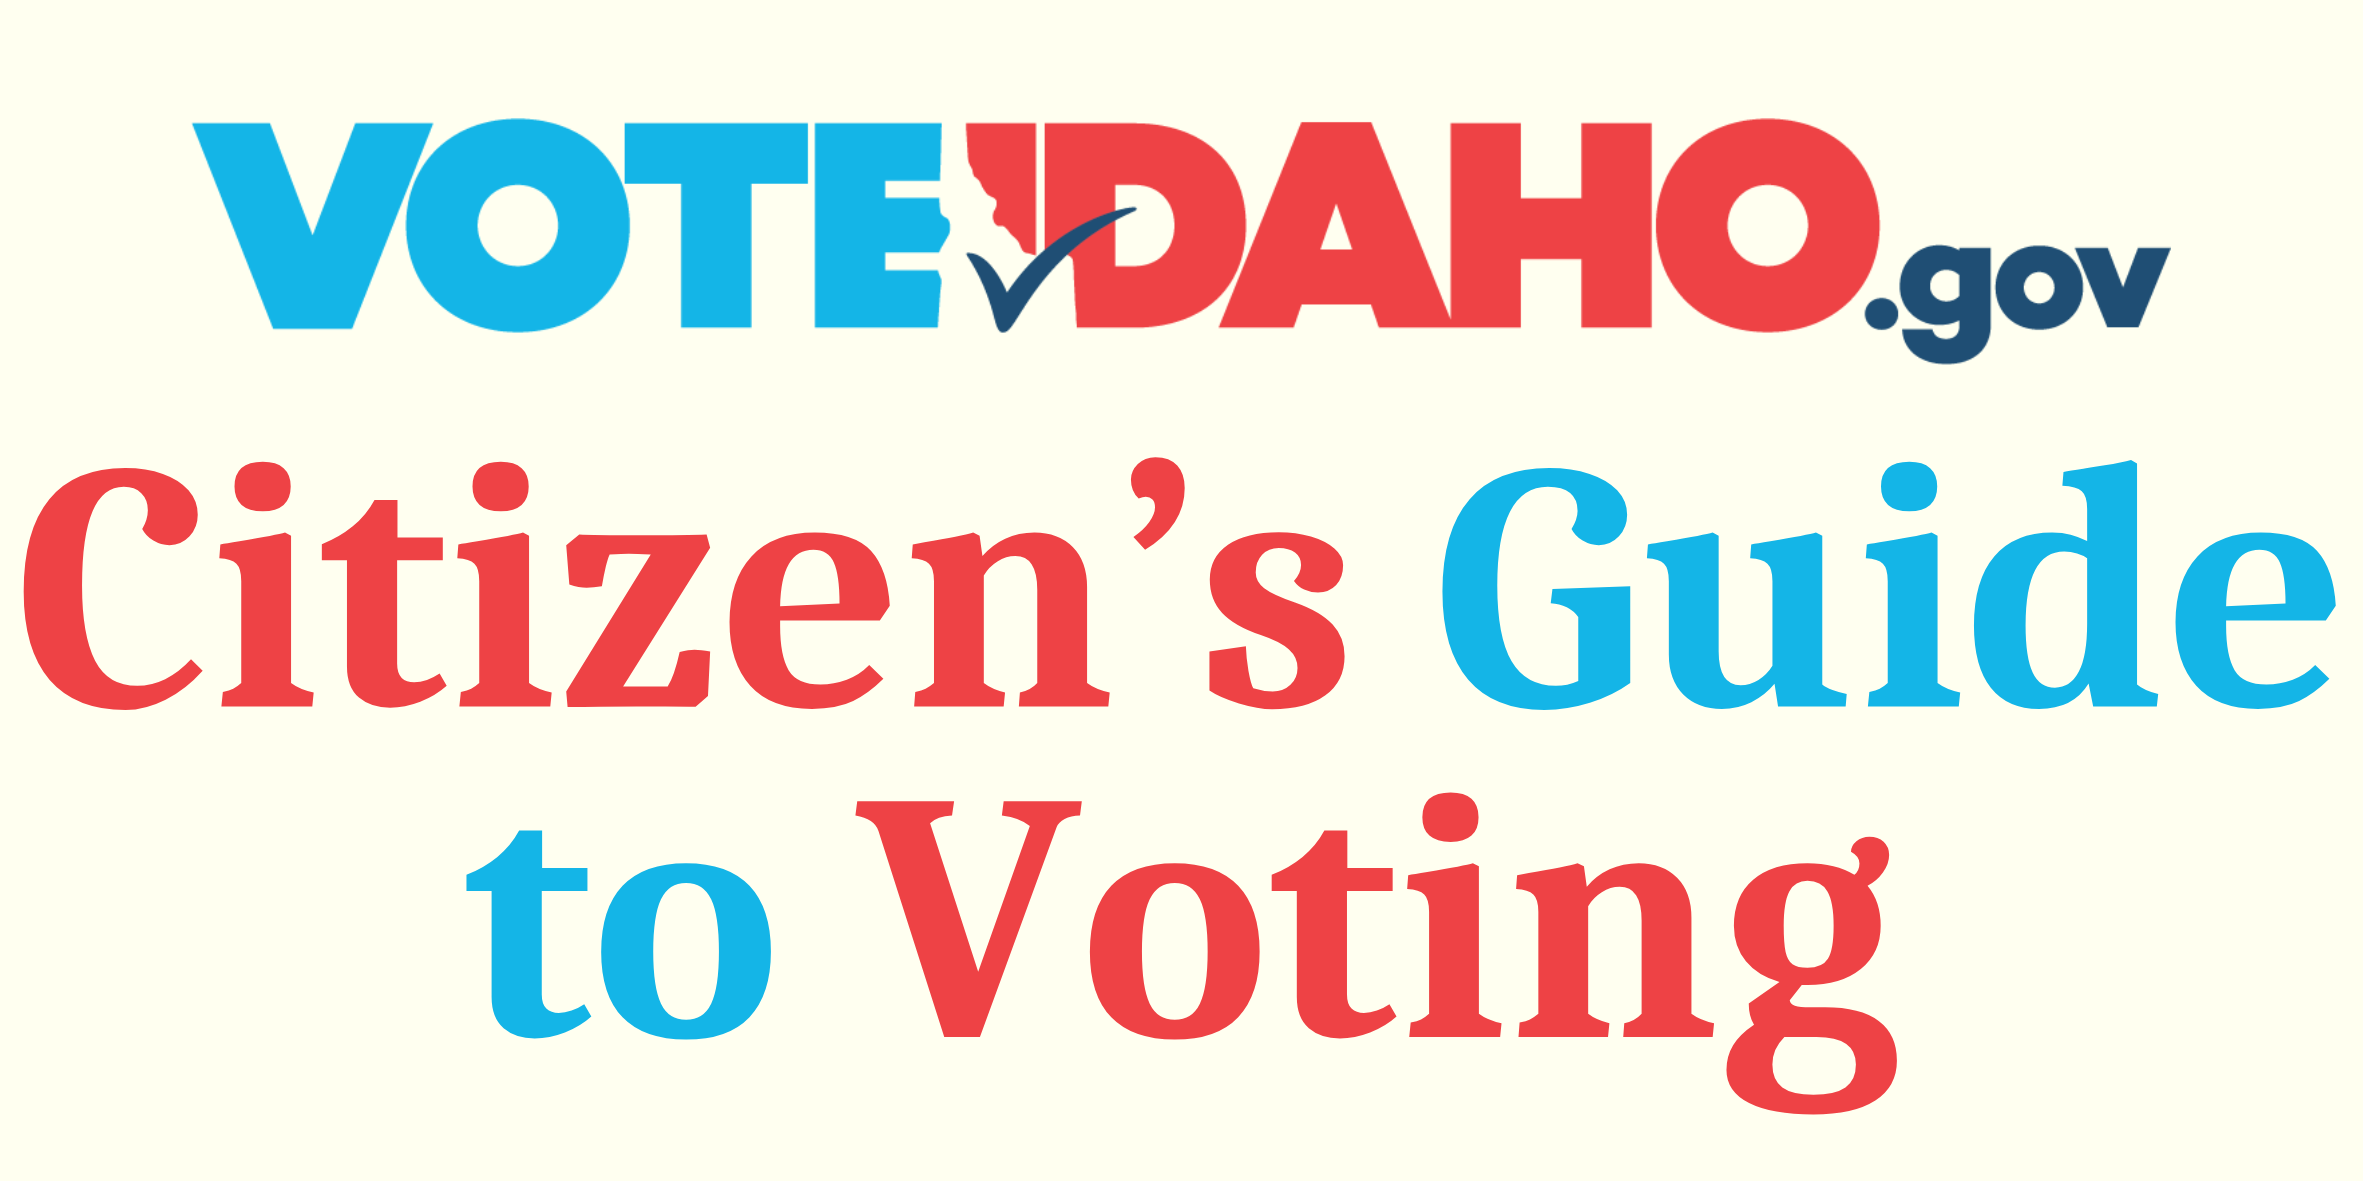 Vote Idaho.gov Citizen's Guide to Voting